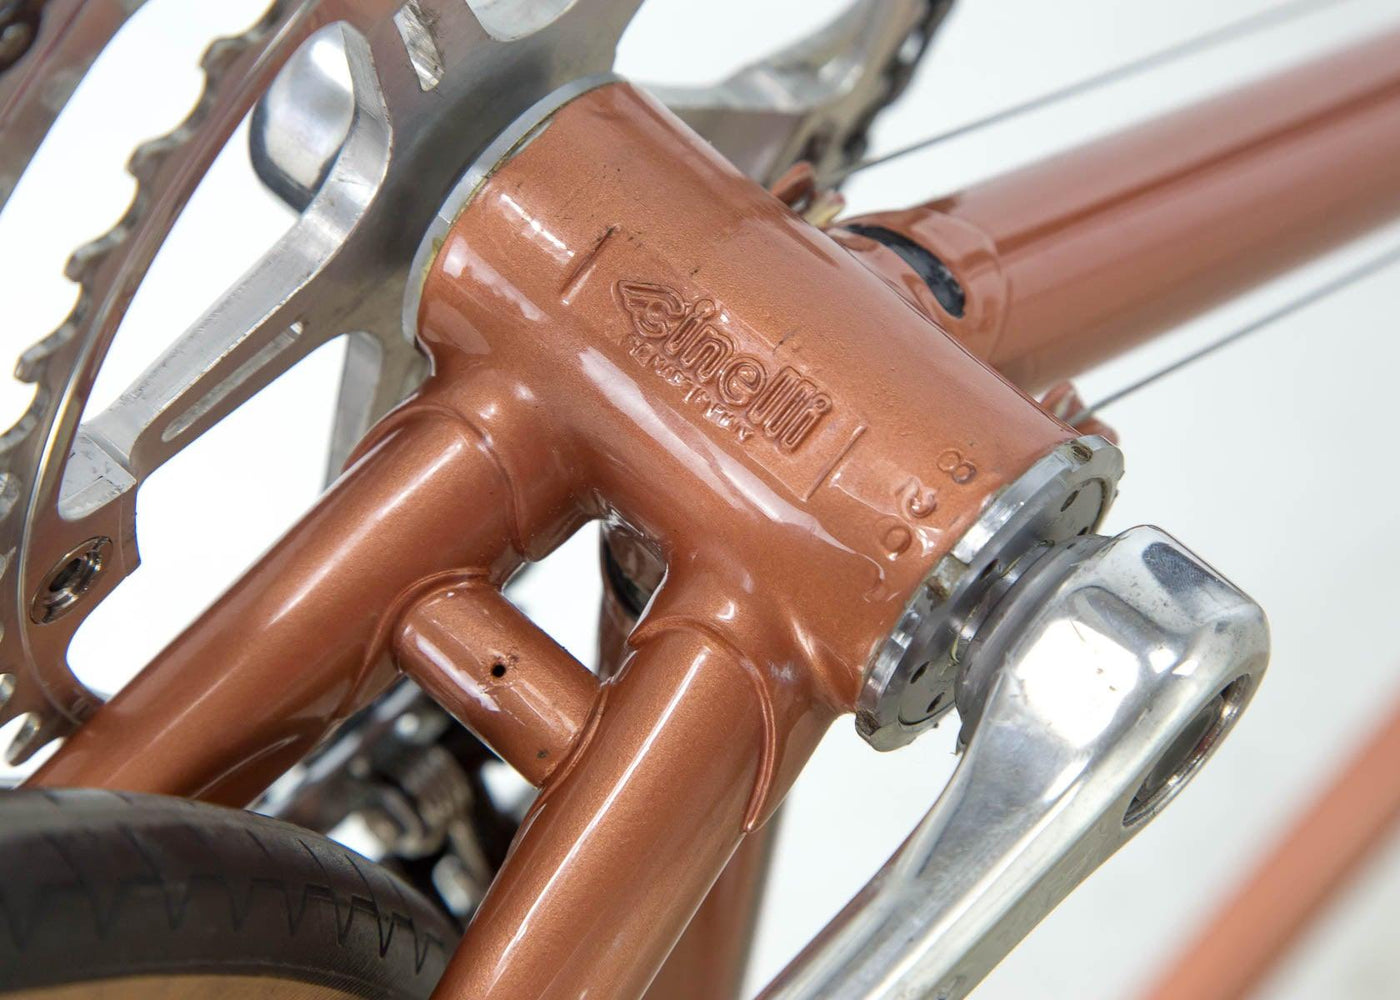 Cinelli Supercorsa Classic Road Bicycle 1982 - Steel Vintage Bikes